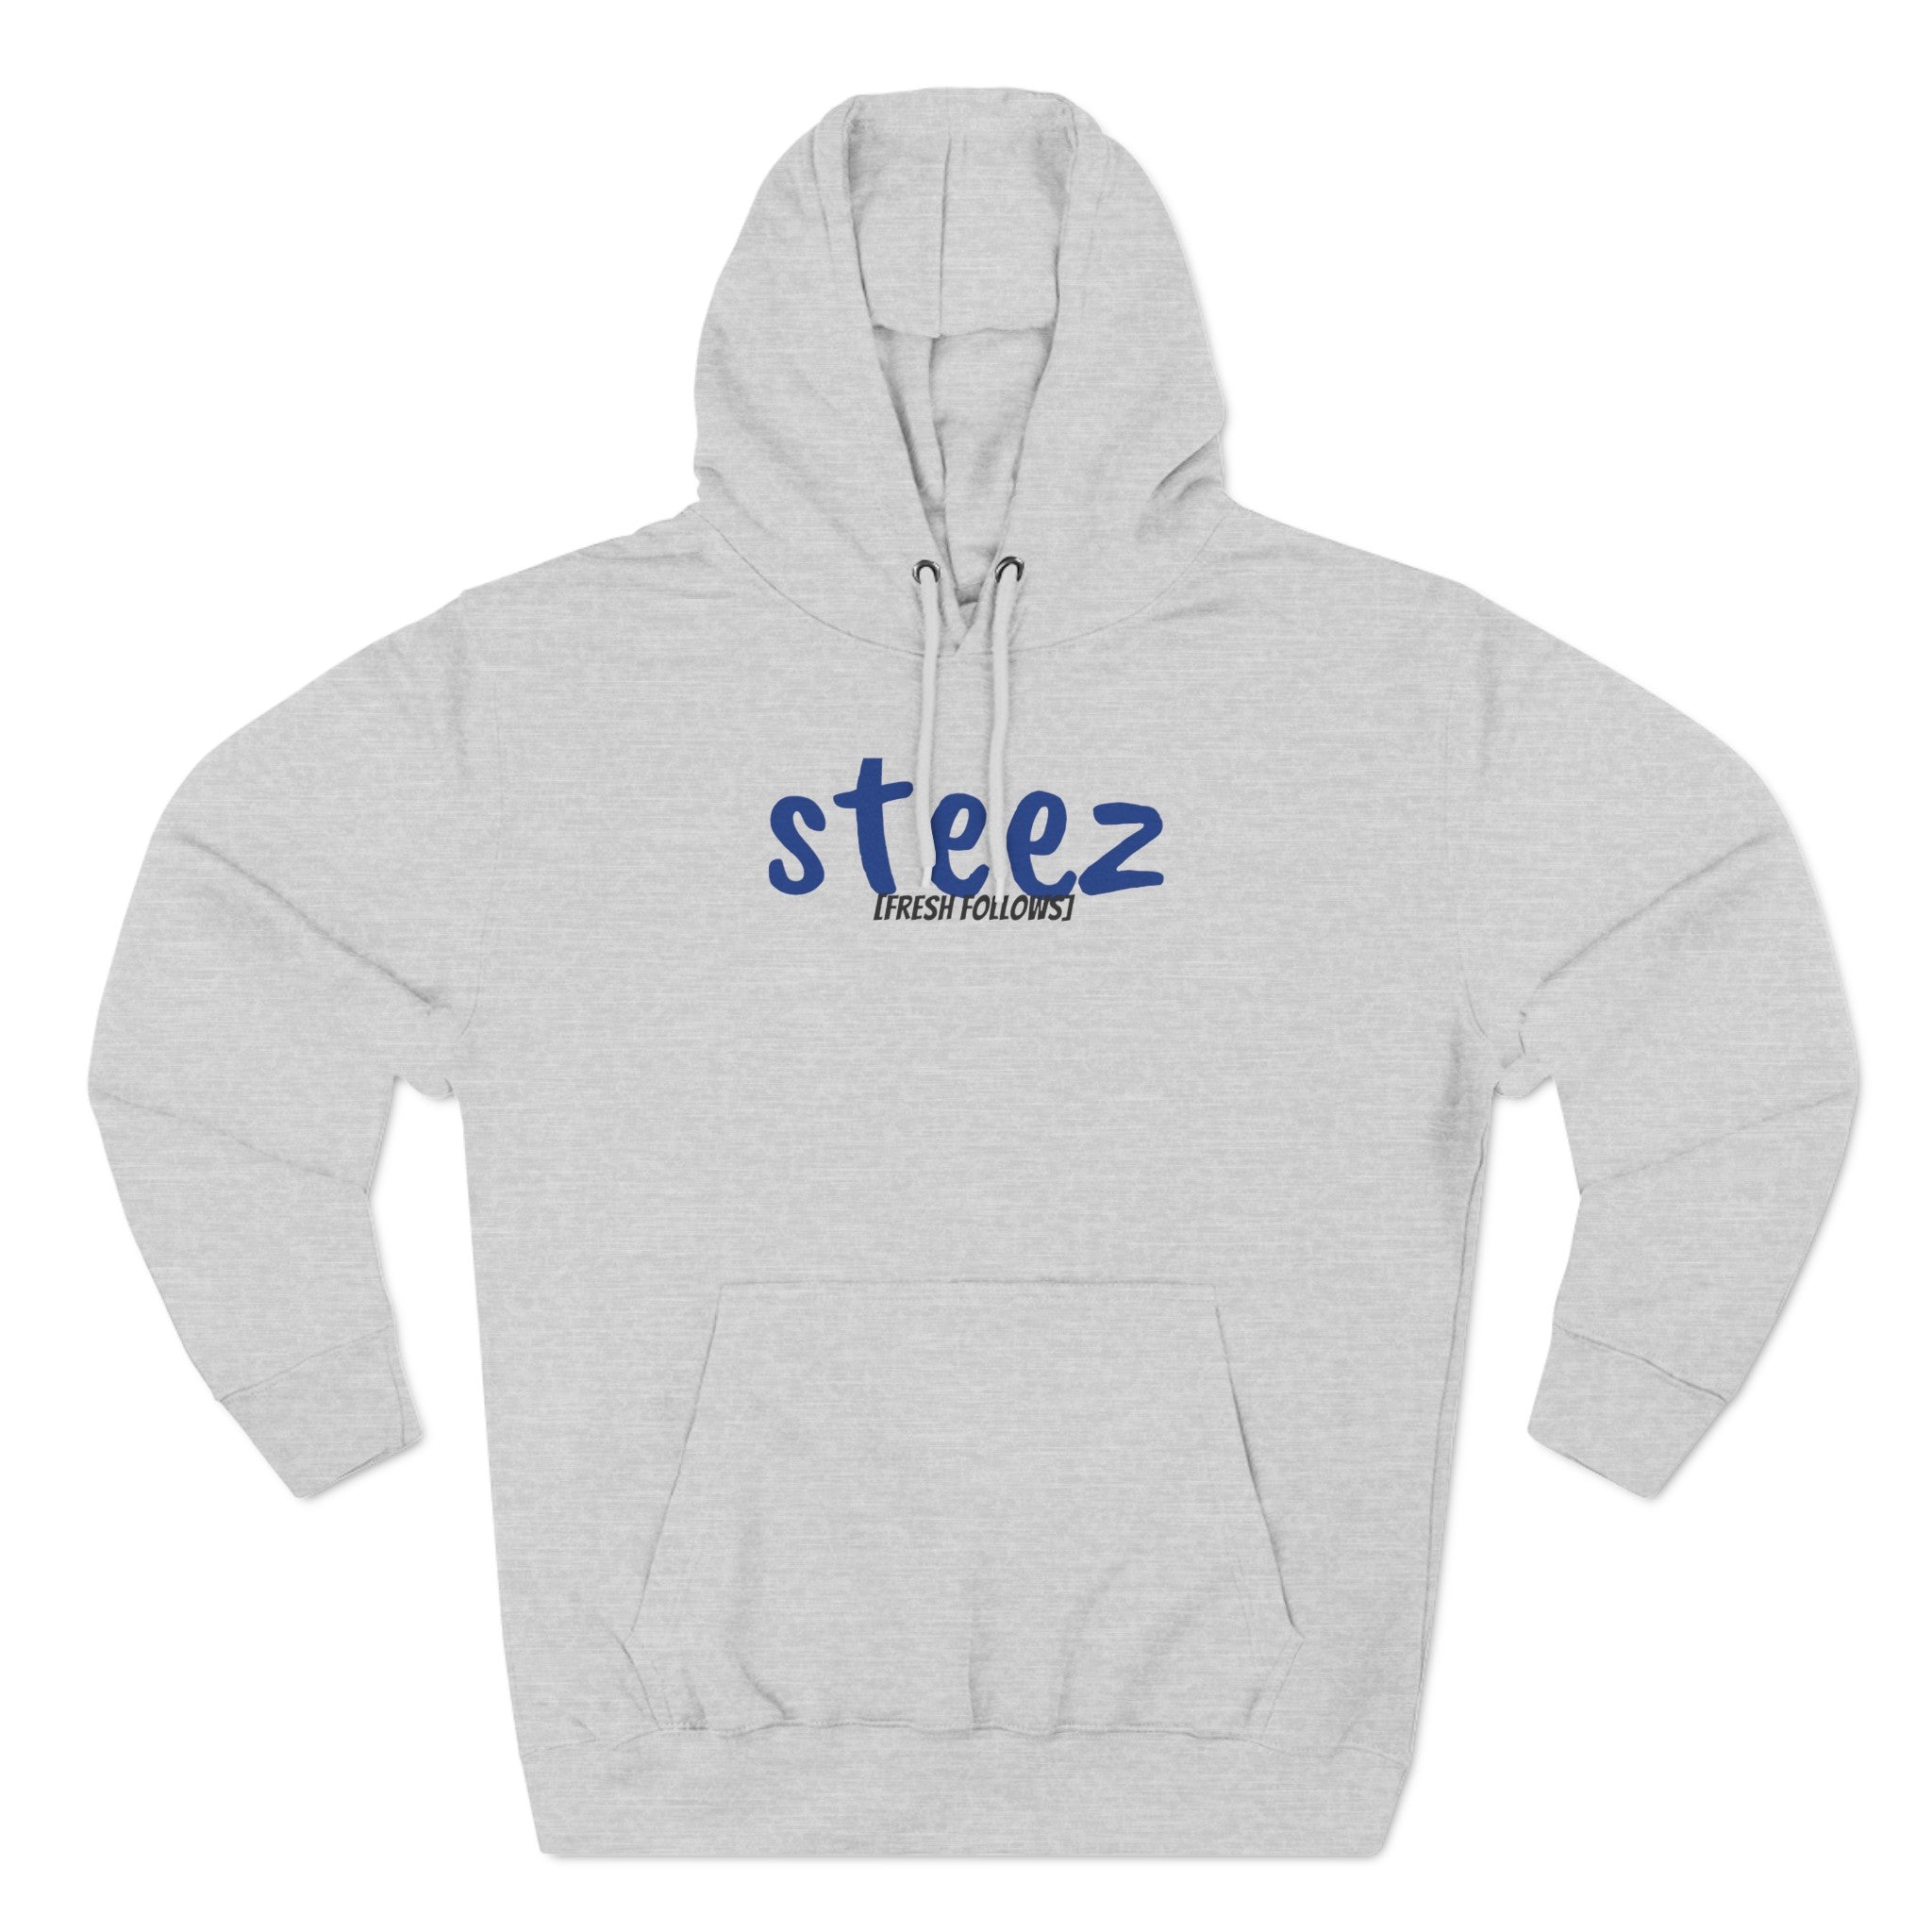 "steez" fresh followsThree-Panel Fleece Hoodie - gottogetit prod.